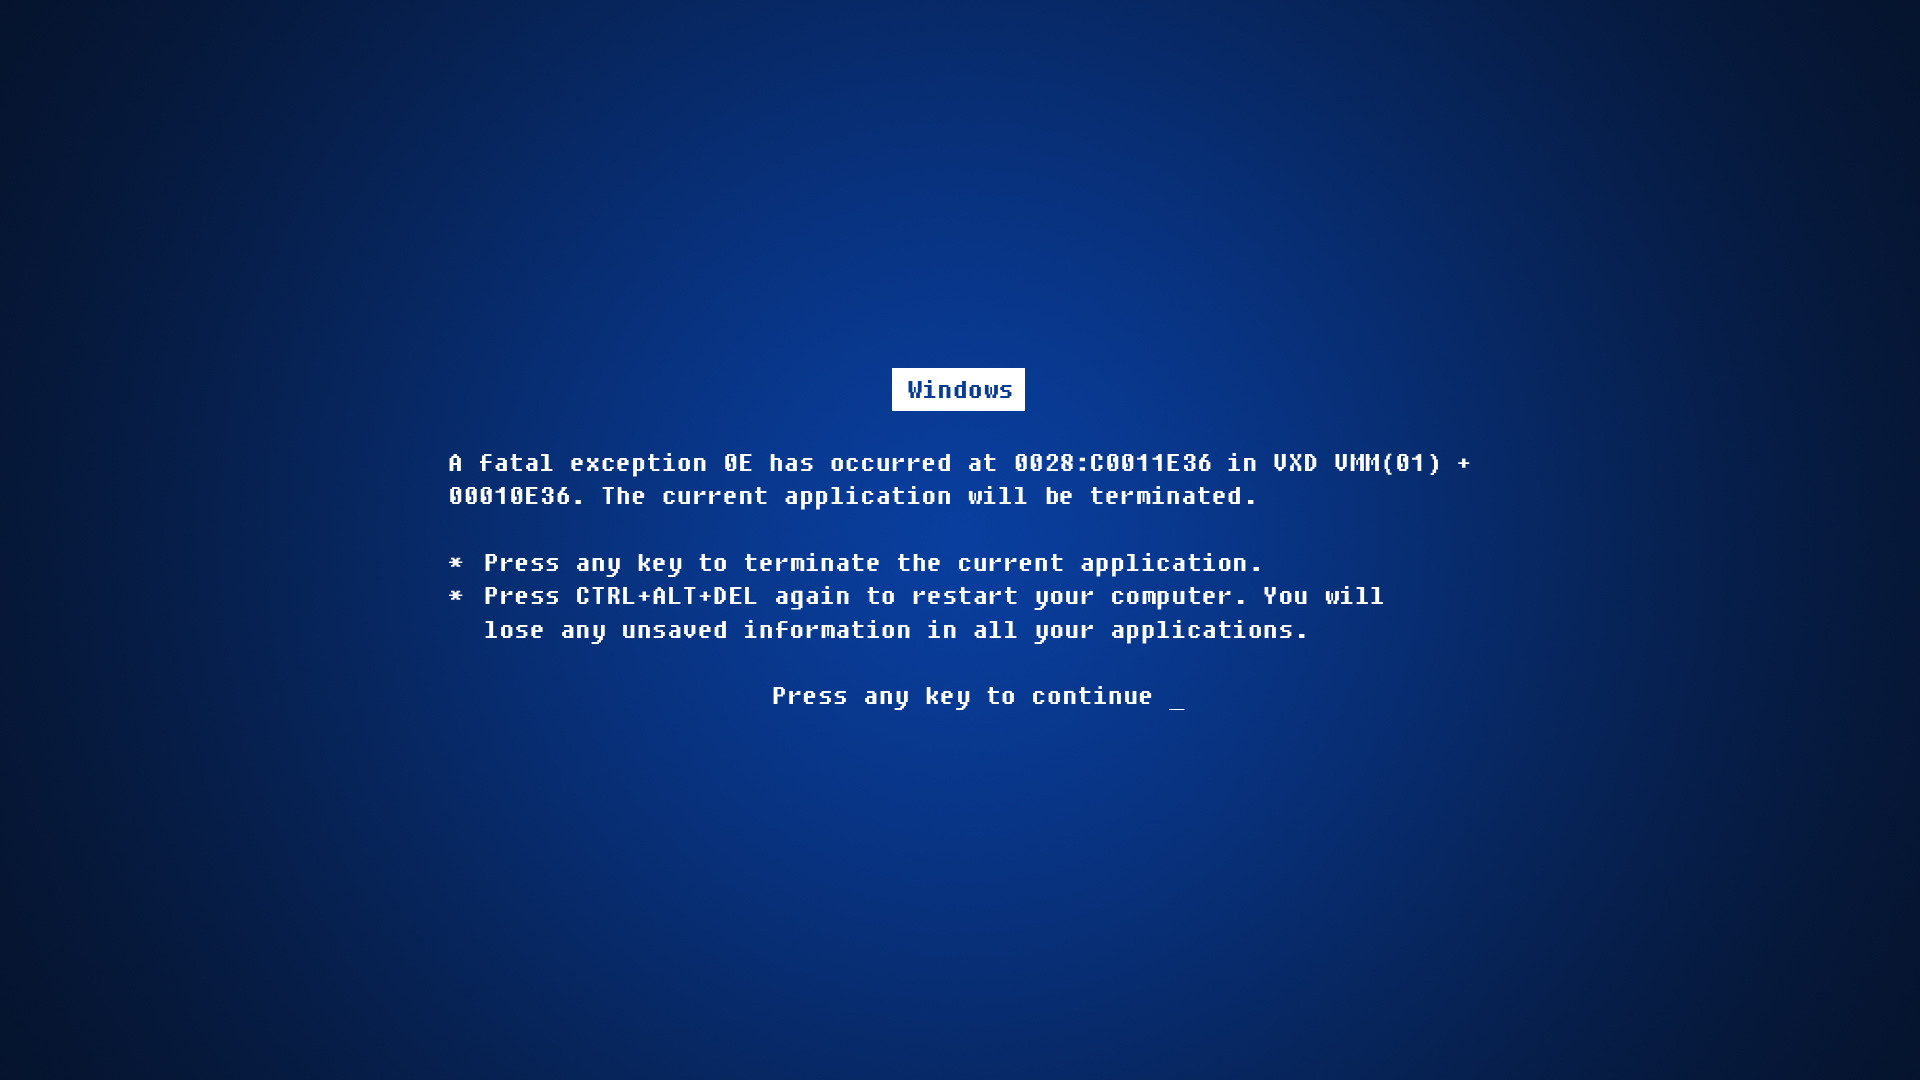 1920x1080 The Windows Blue Screen of Death Makes a Hilarious iPad Lock Screen | OSXDaily